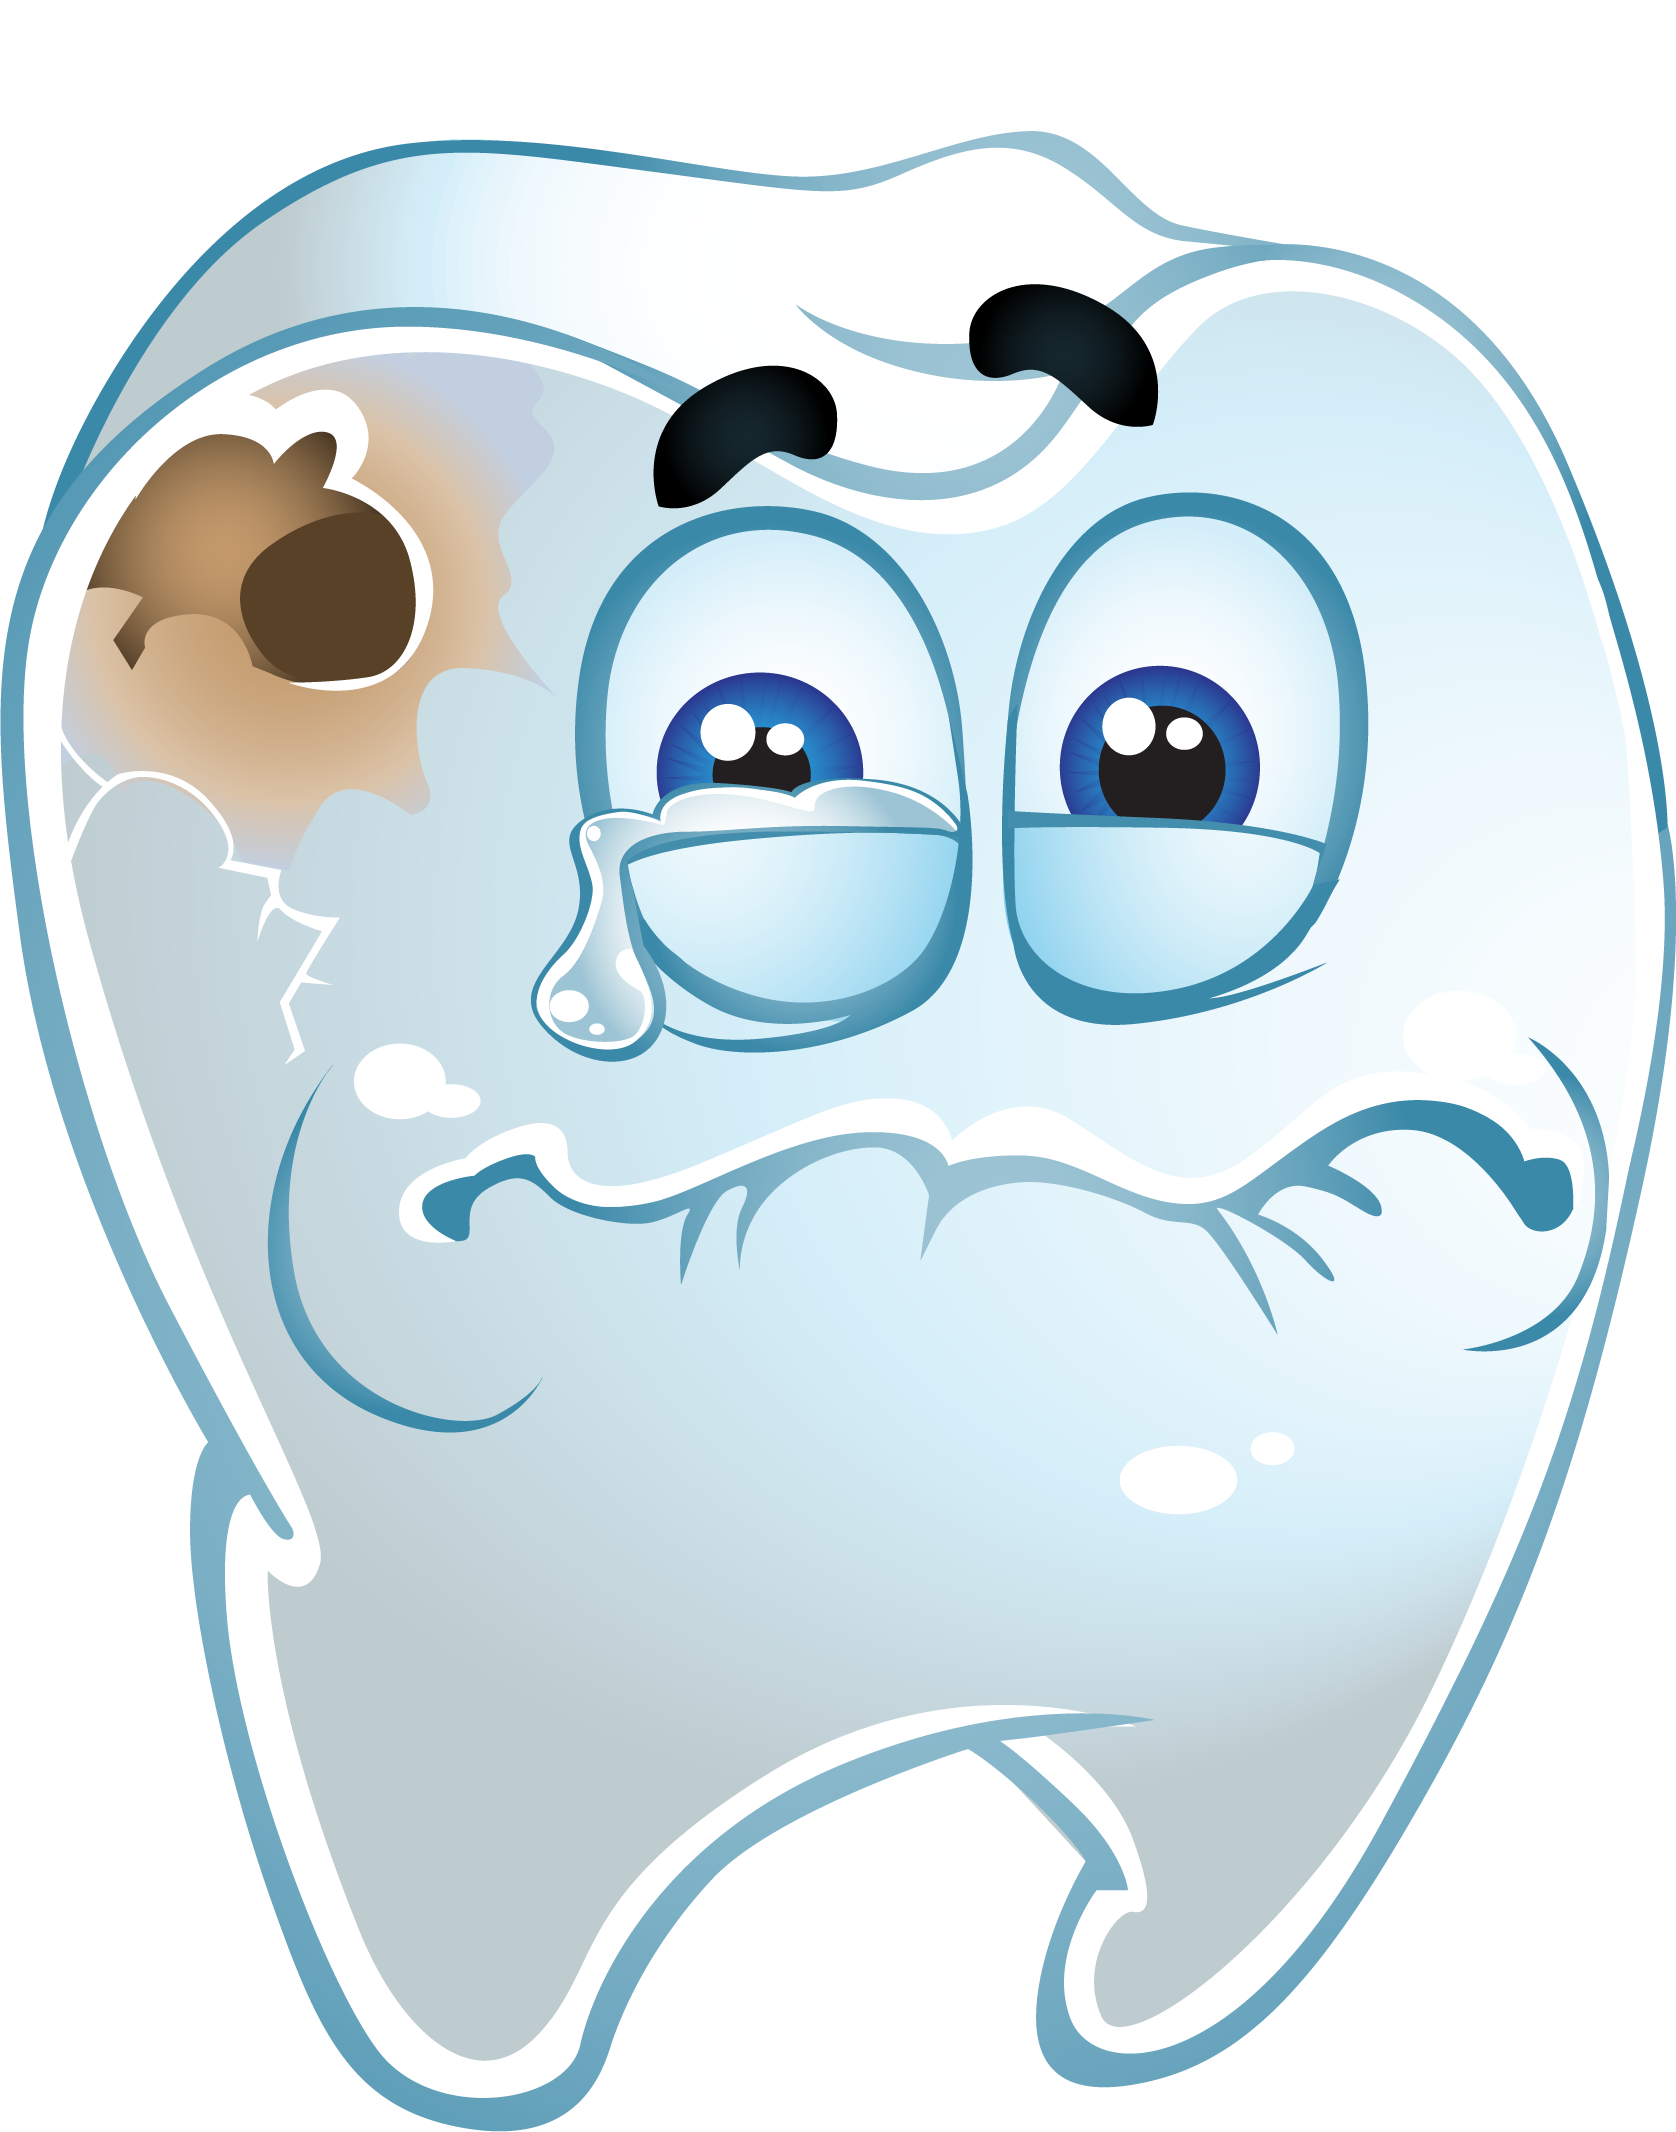 Teeth PNG Image Background